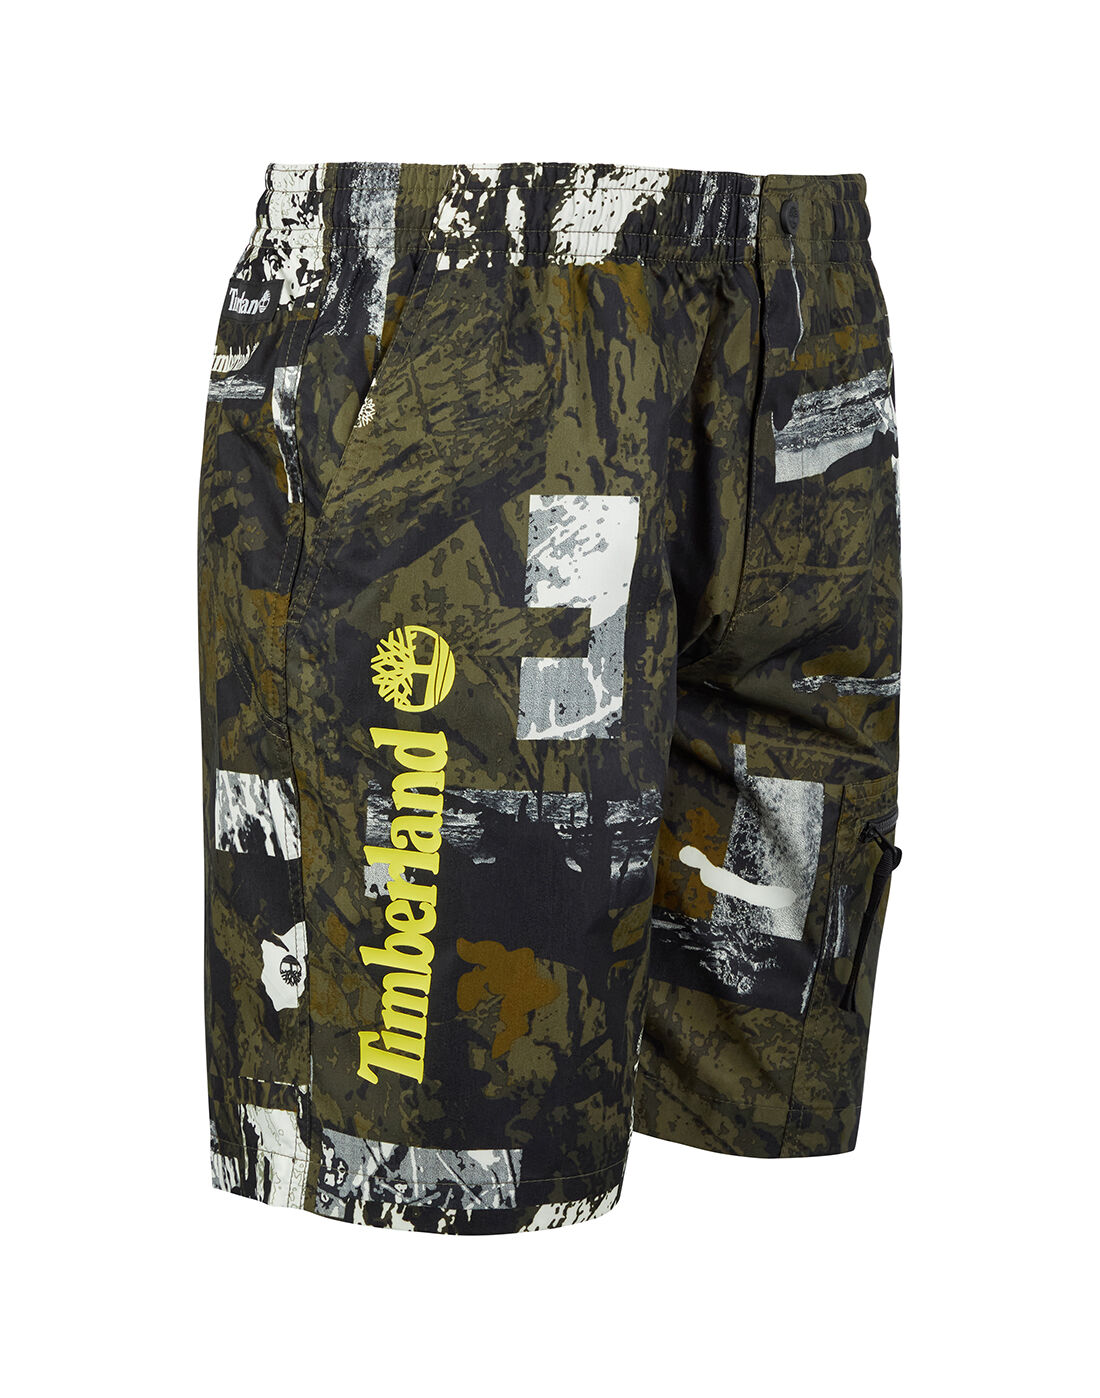 timberland shorts uk